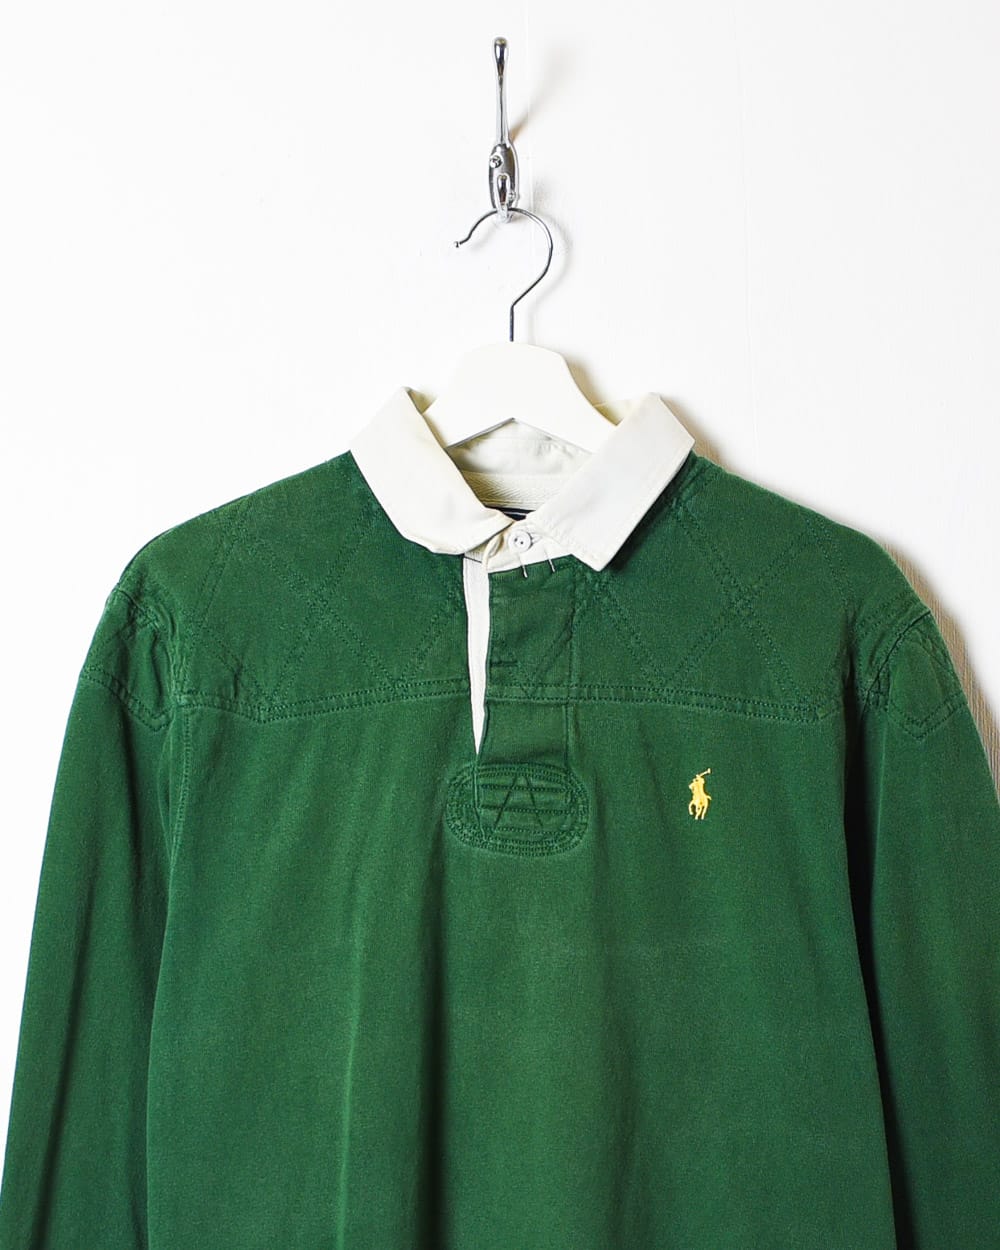 Green Polo Ralph Lauren Rugby Shirt - Large